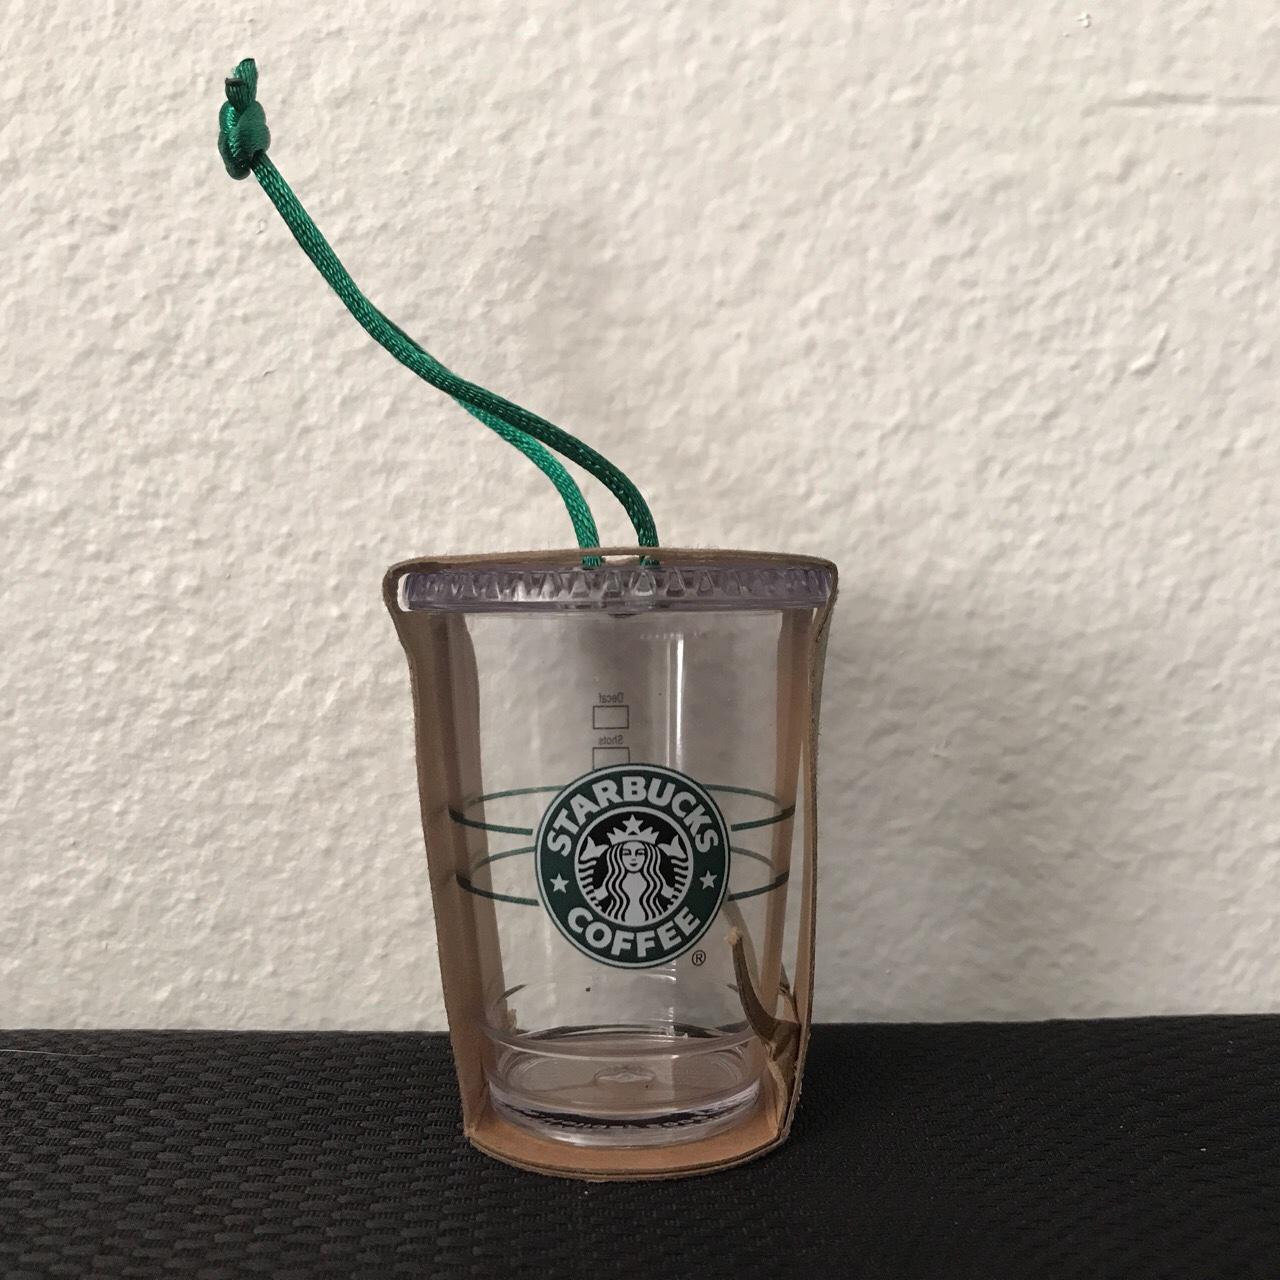 2009 Starbucks Ornament Clear Iced / Cold Beverage - Depop